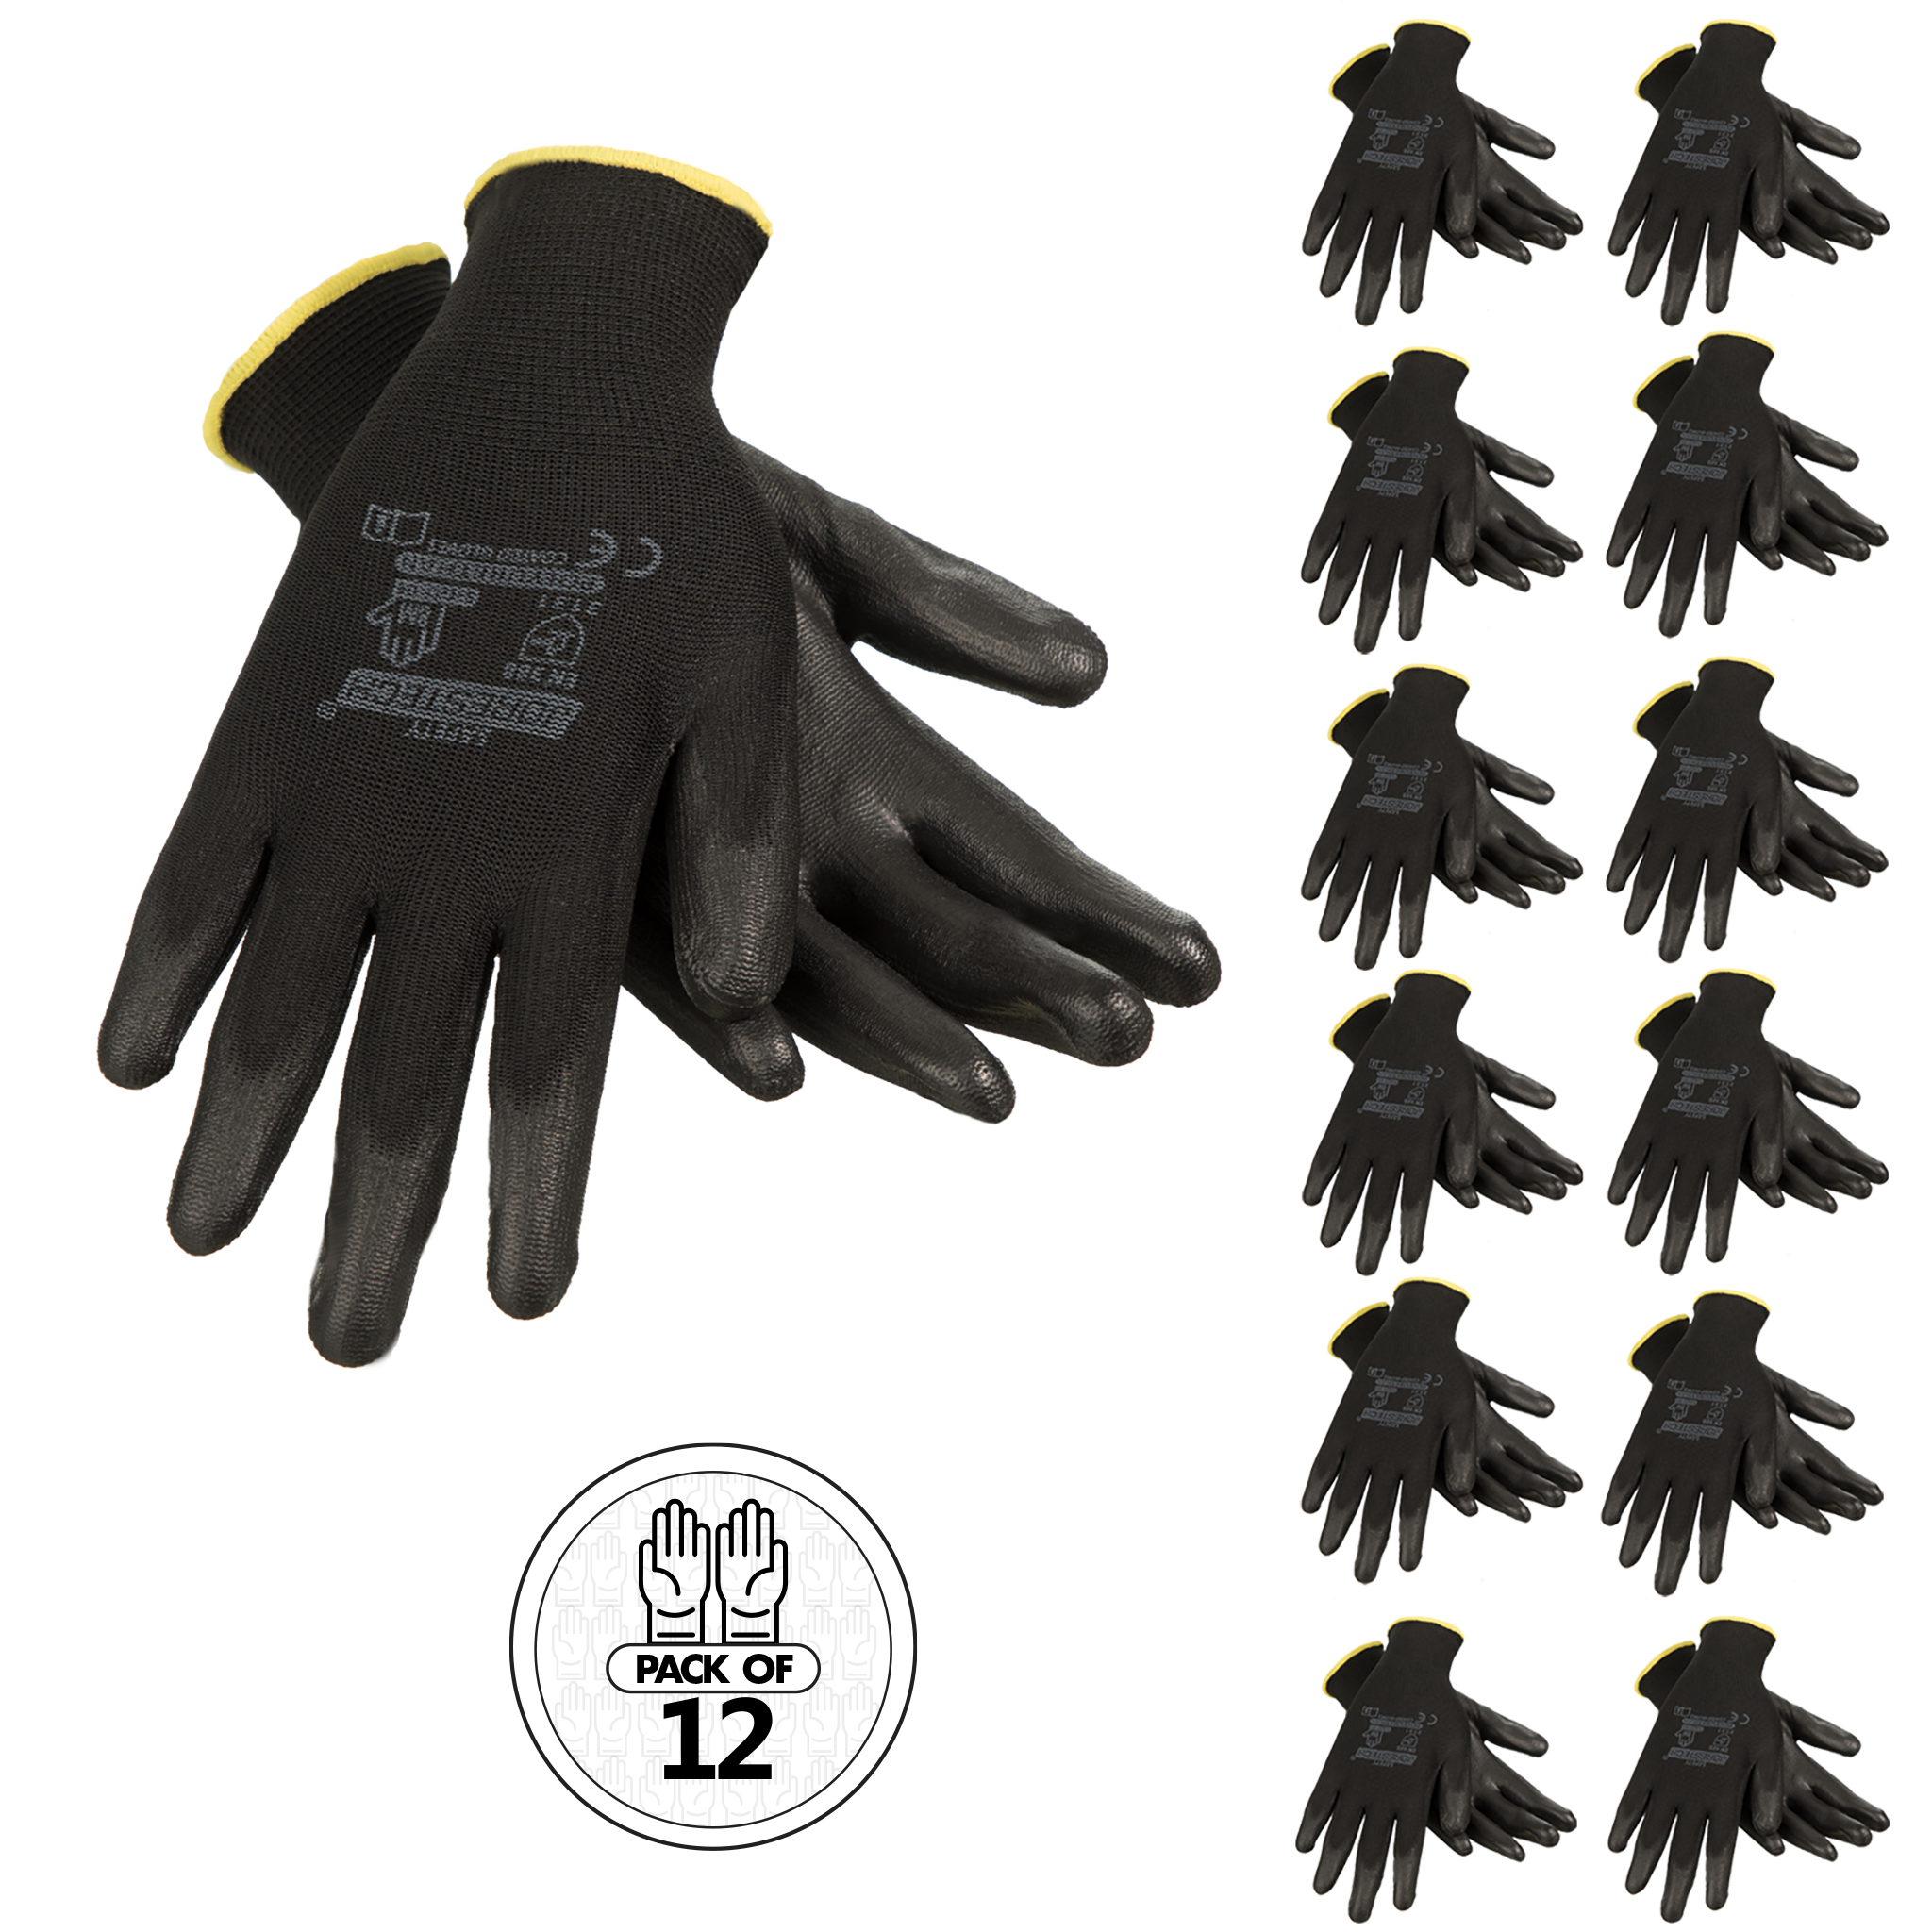 Spontex 19443 Protective Gloves, L, 13 in L, Gauntlet Cuf